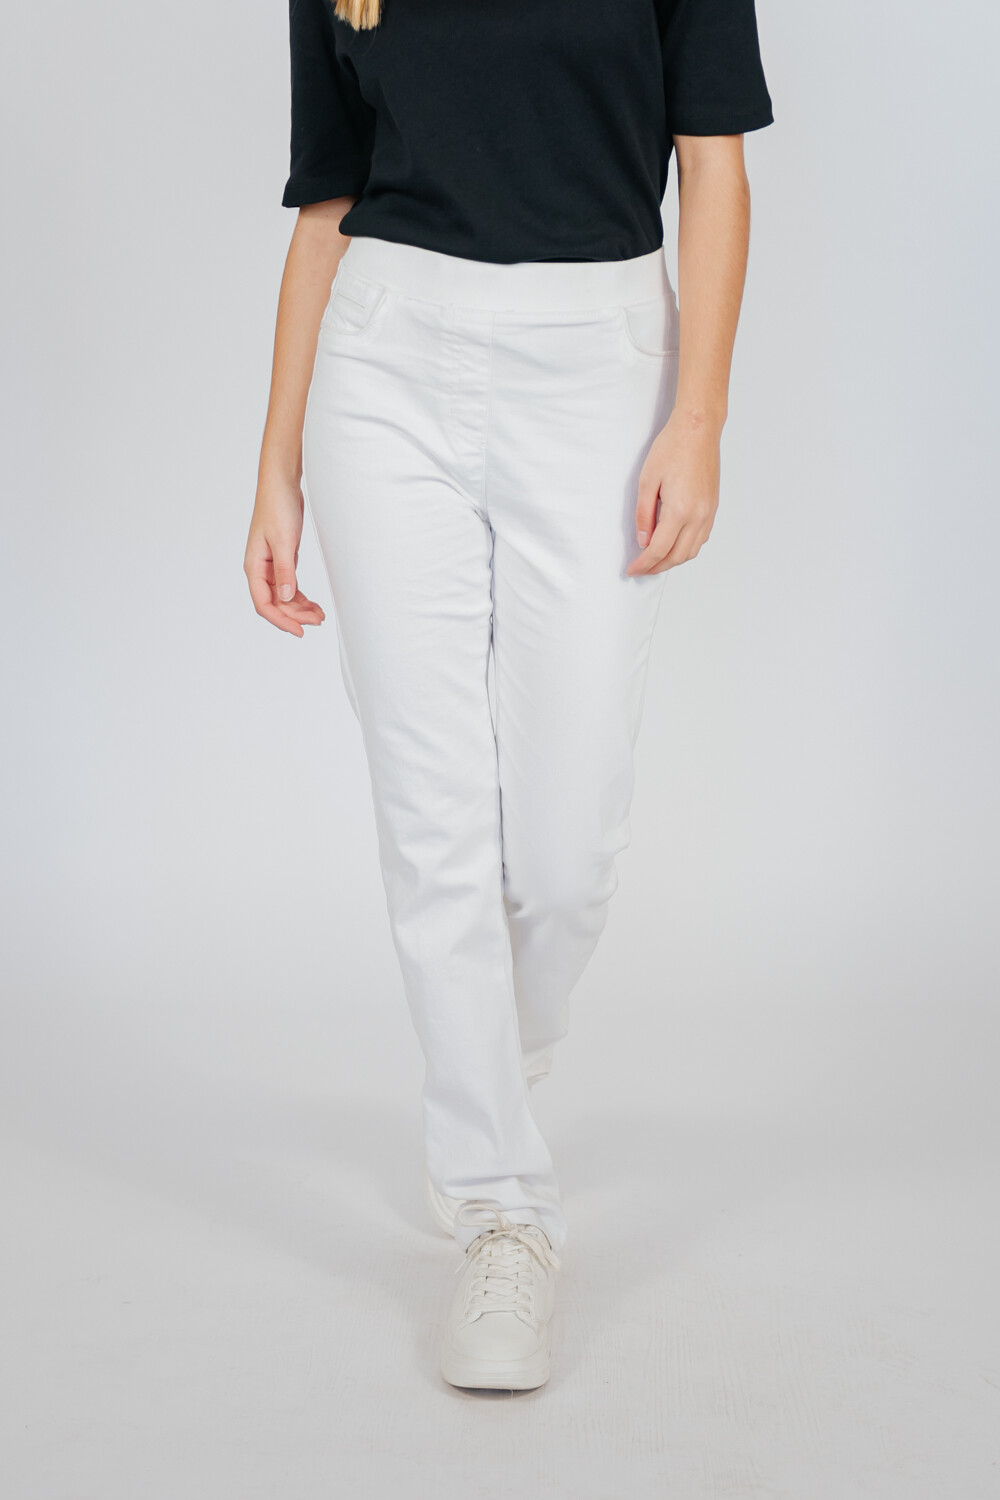 Pantalon Nyala 0203 Blanco